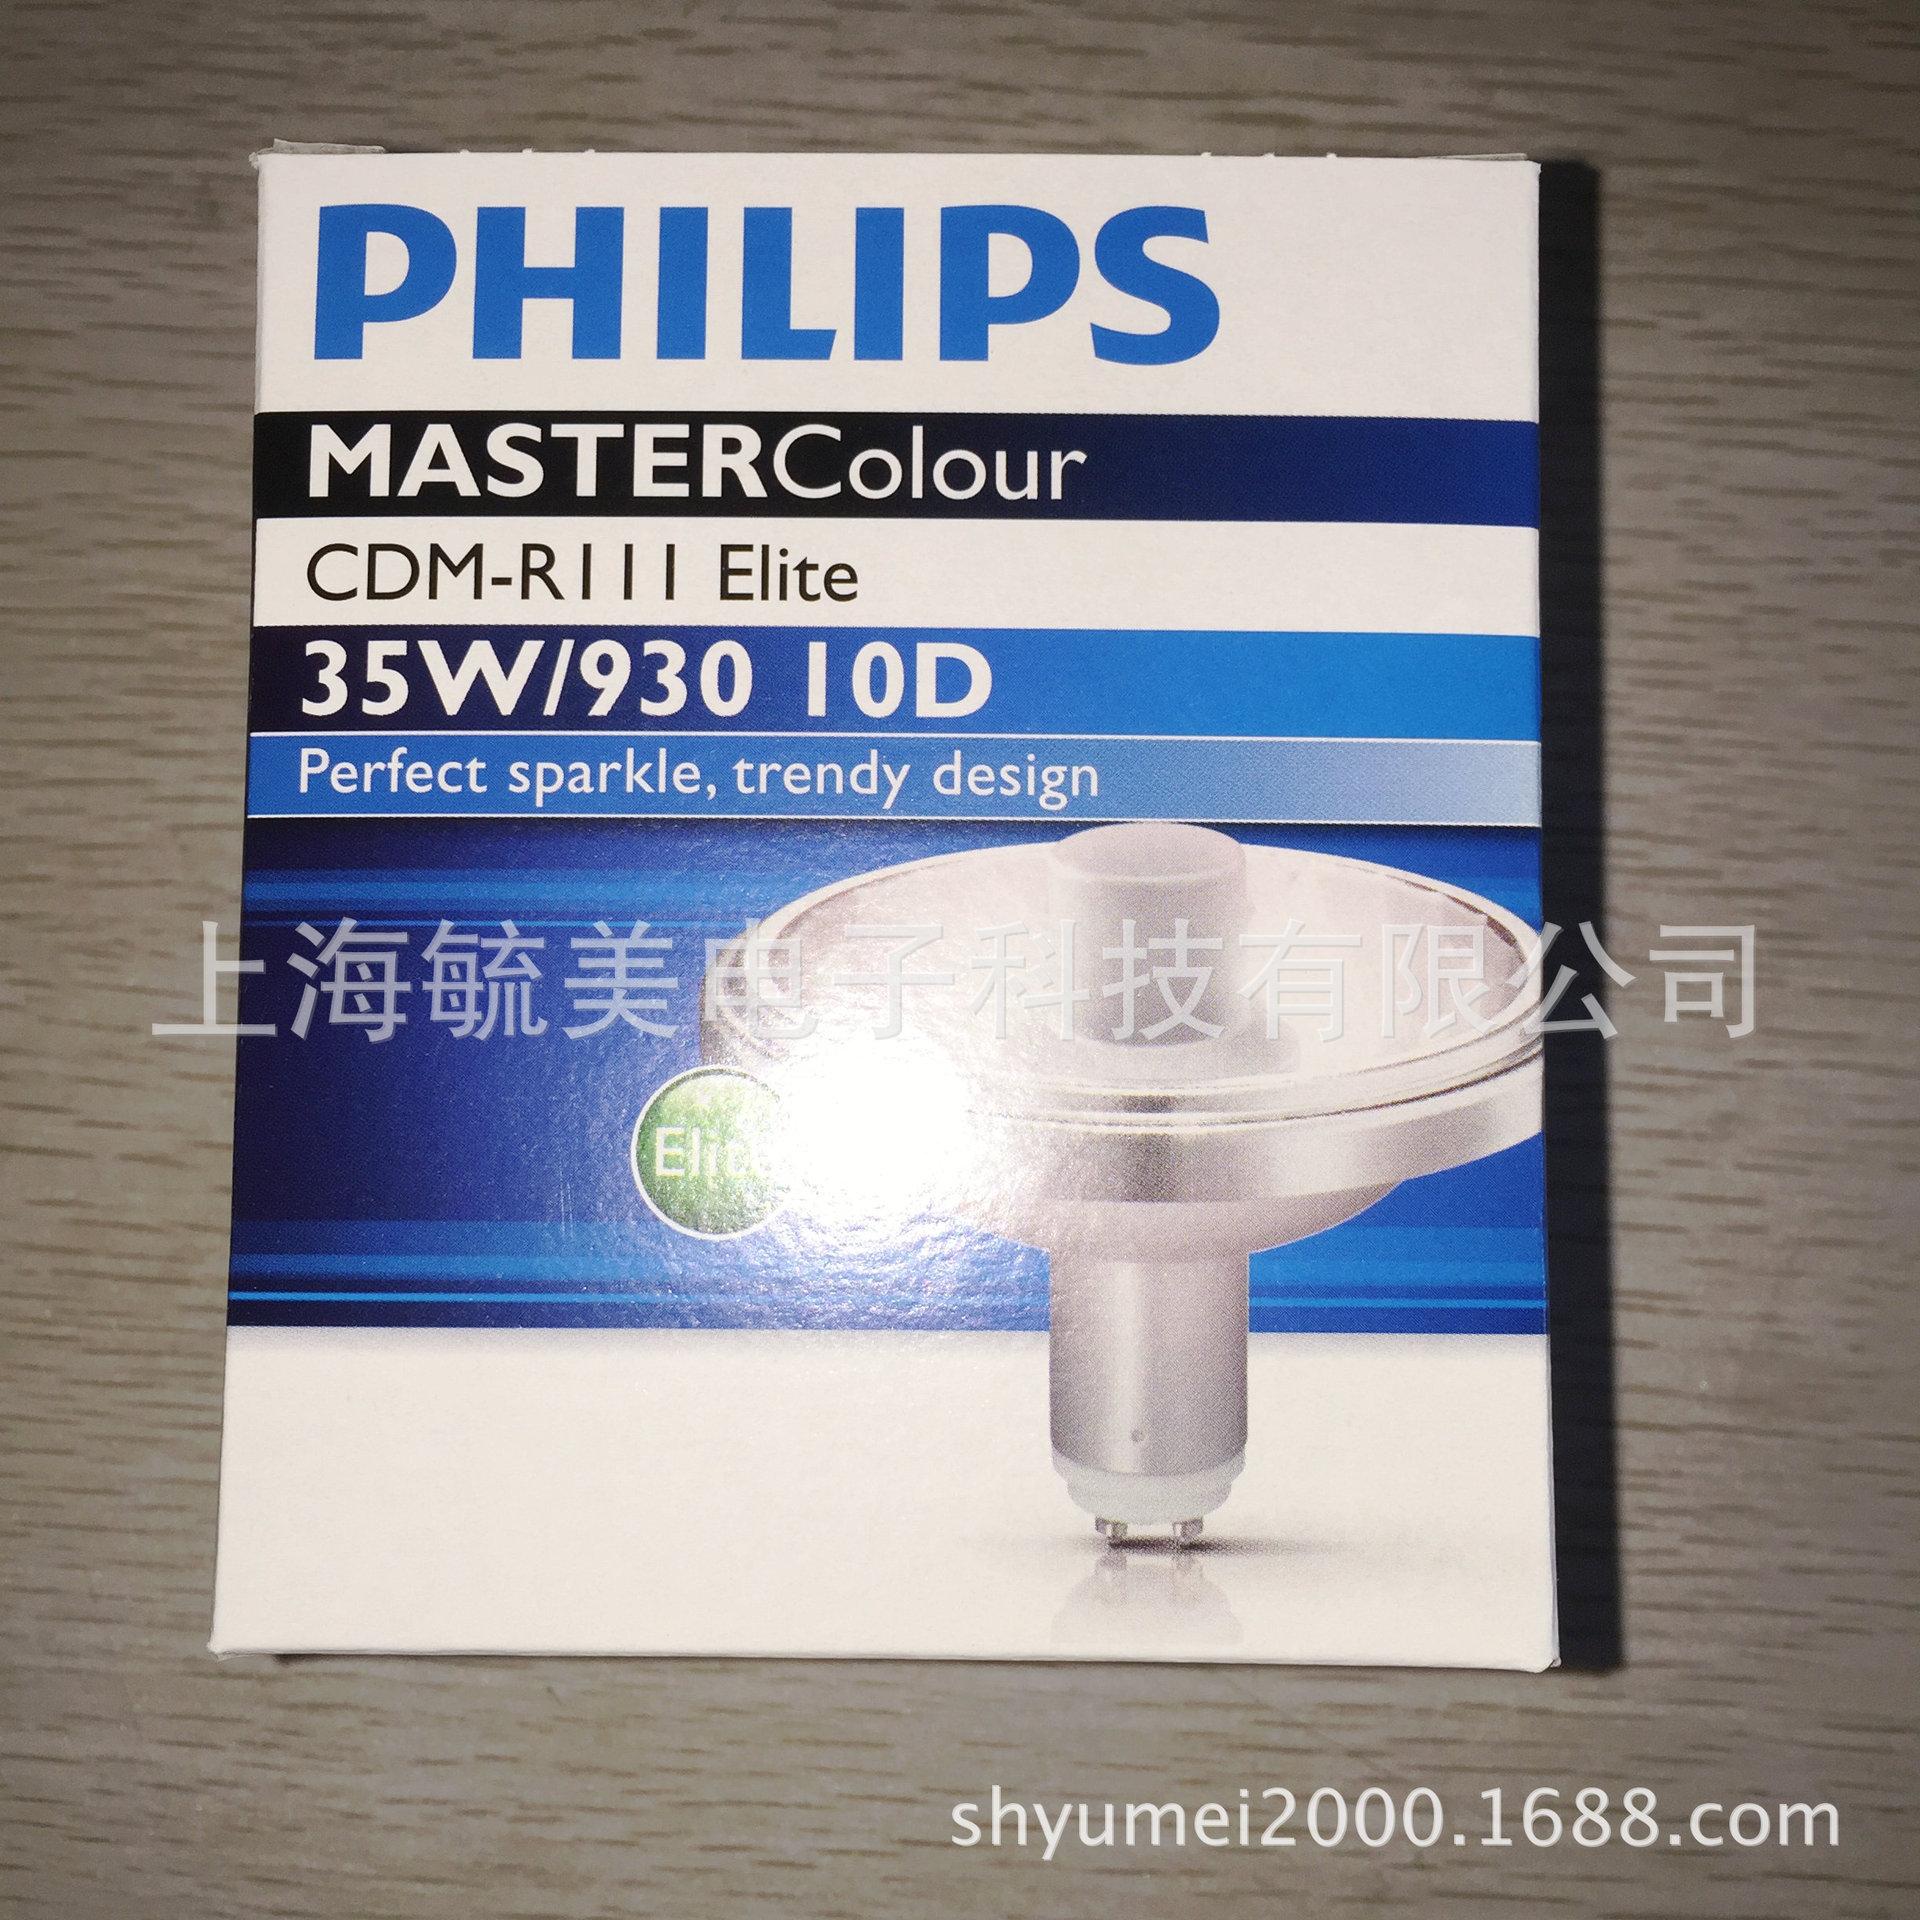 Philips Metal halide lamp CDM-R111 EIite 35W/930 GX8.5 10D The reflective ceramics Aluminum cup